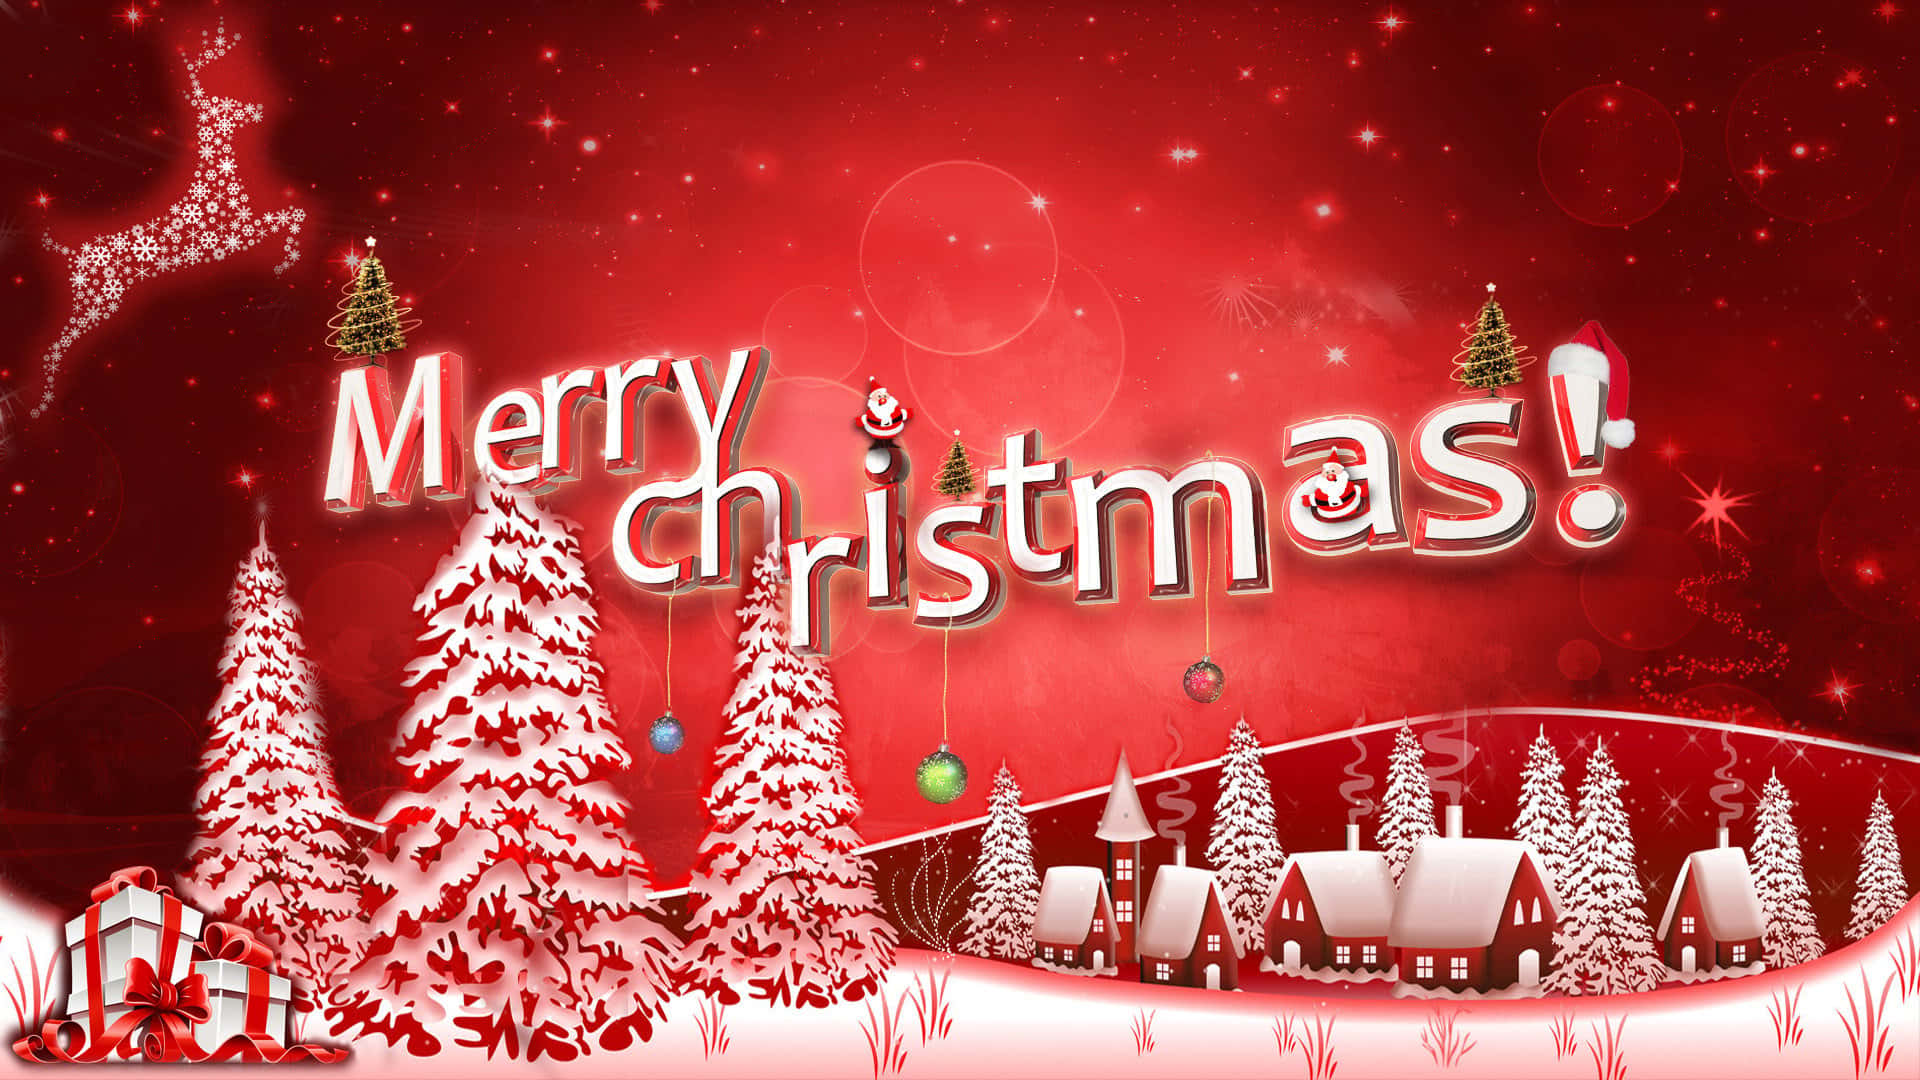 Cool Christmas Digital Artwork Of Merry Christmas Background